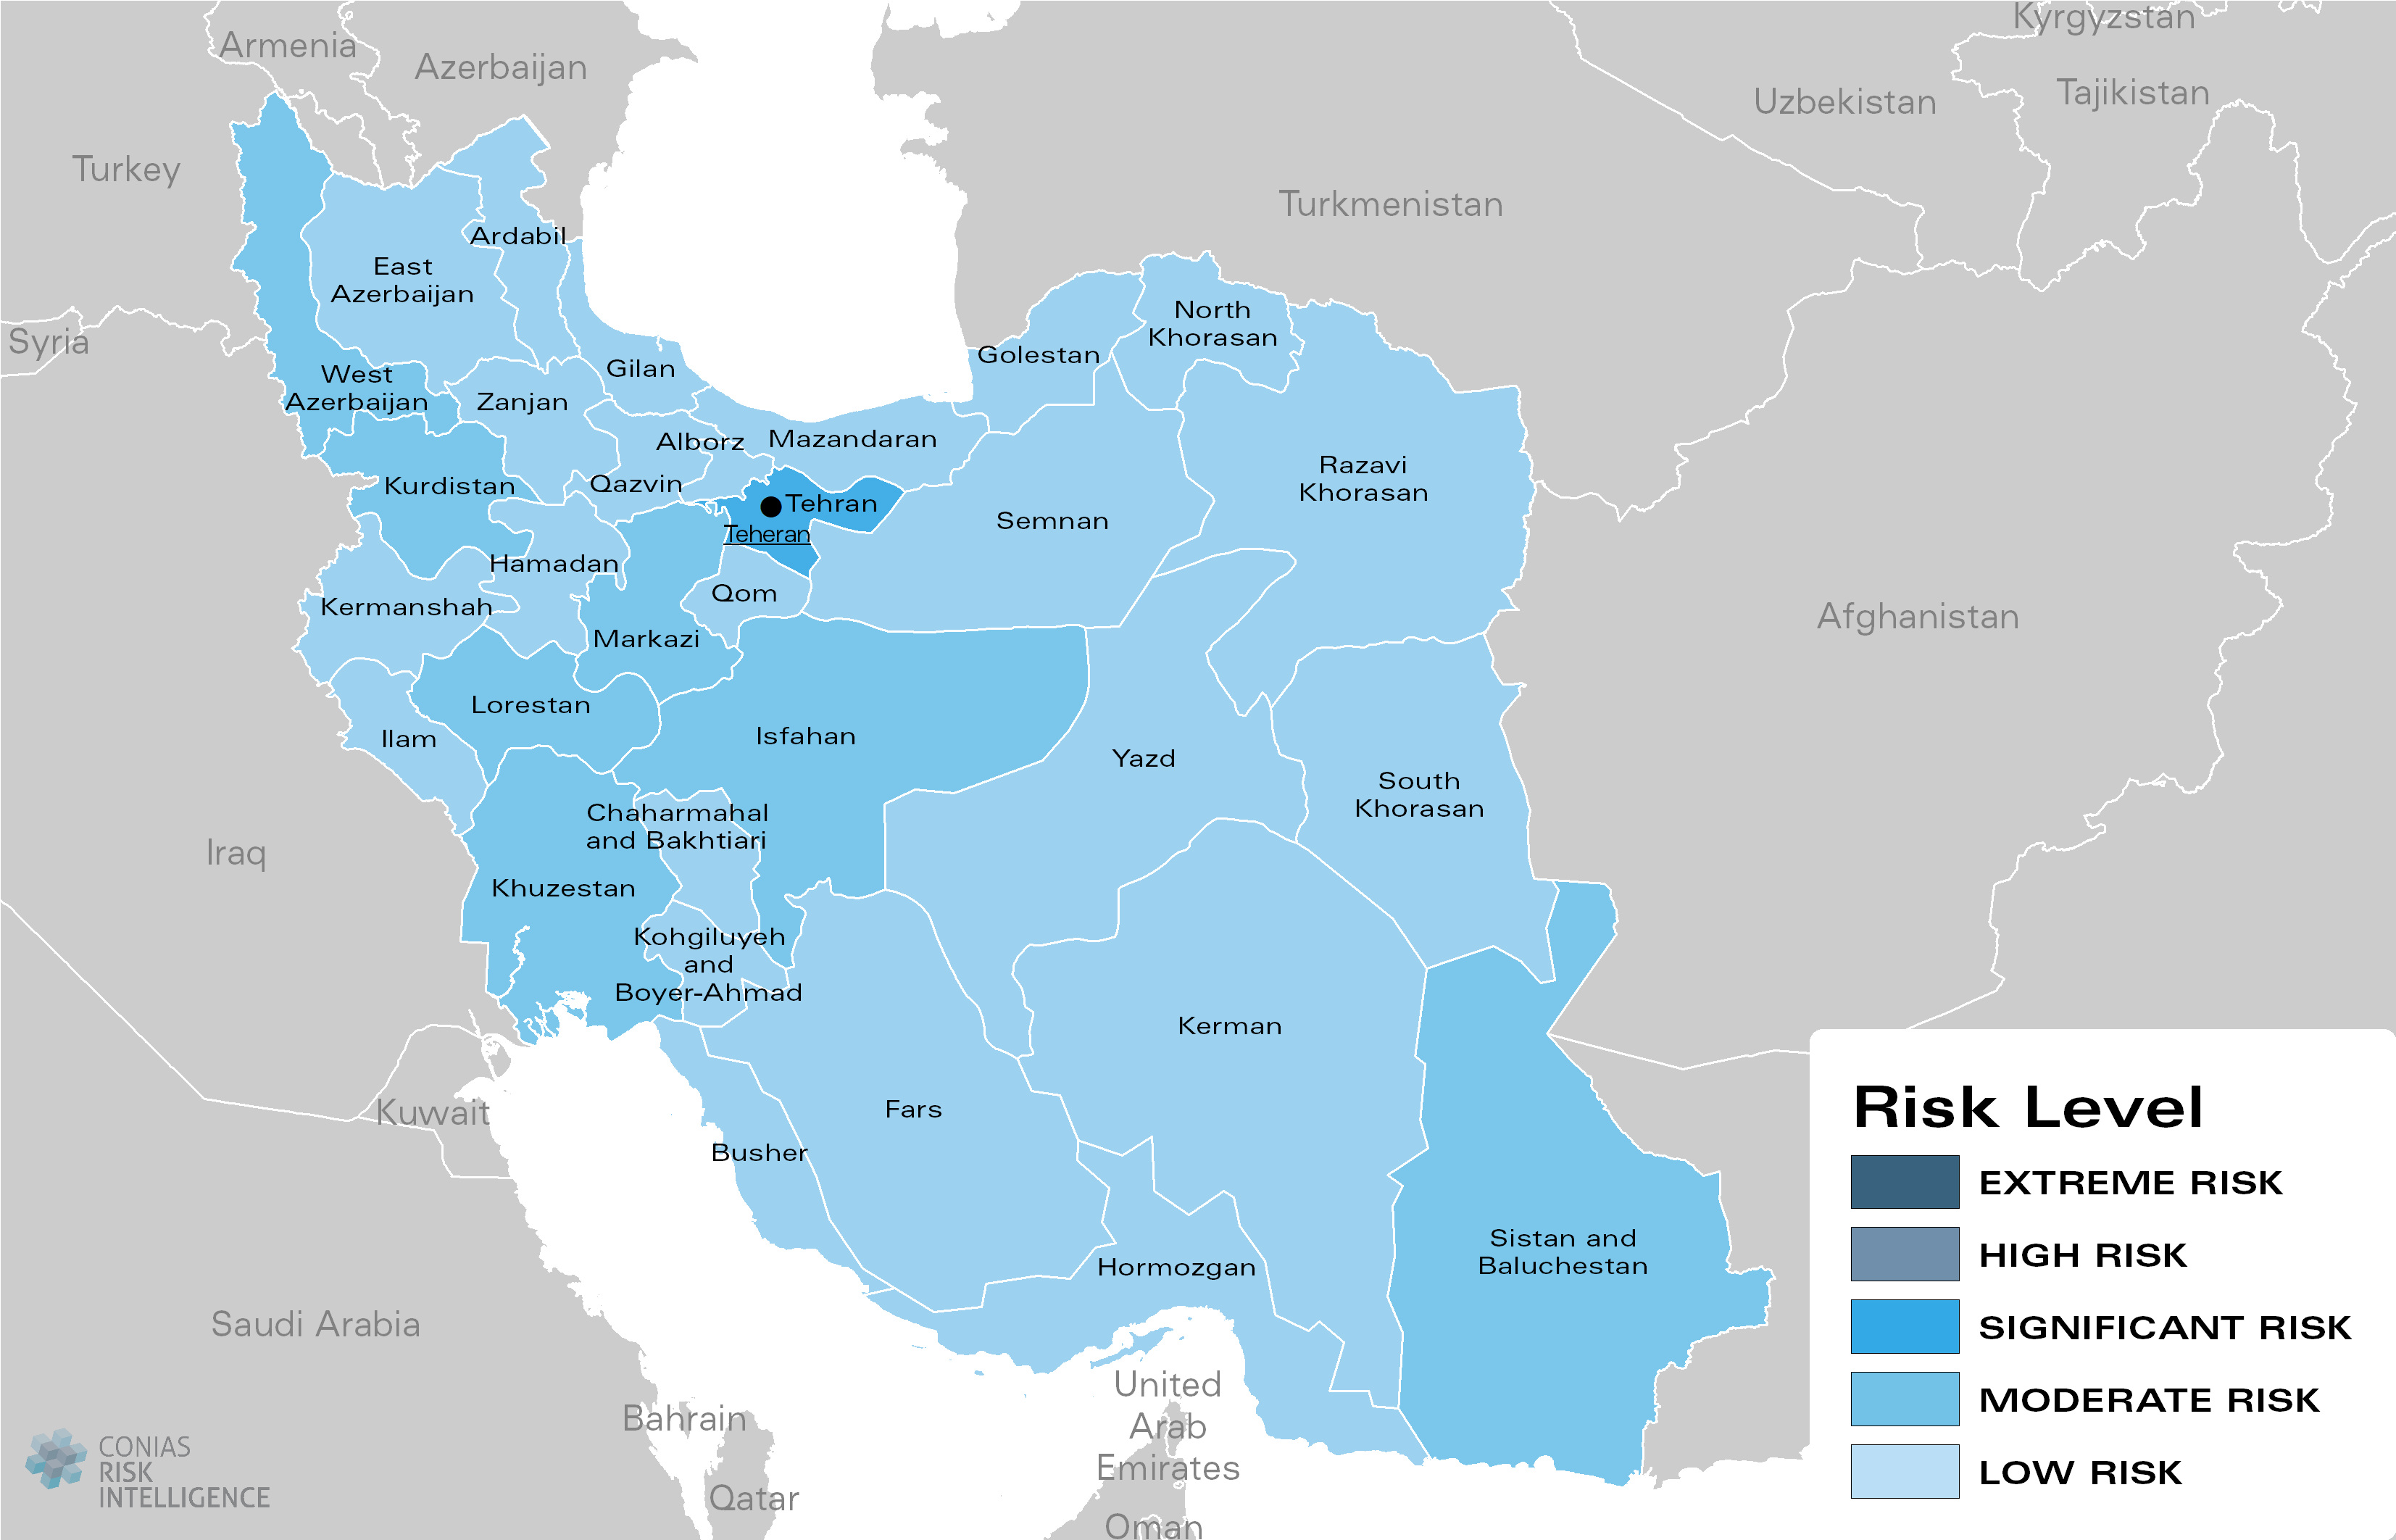 CONIAS Political Risk Maps Iran